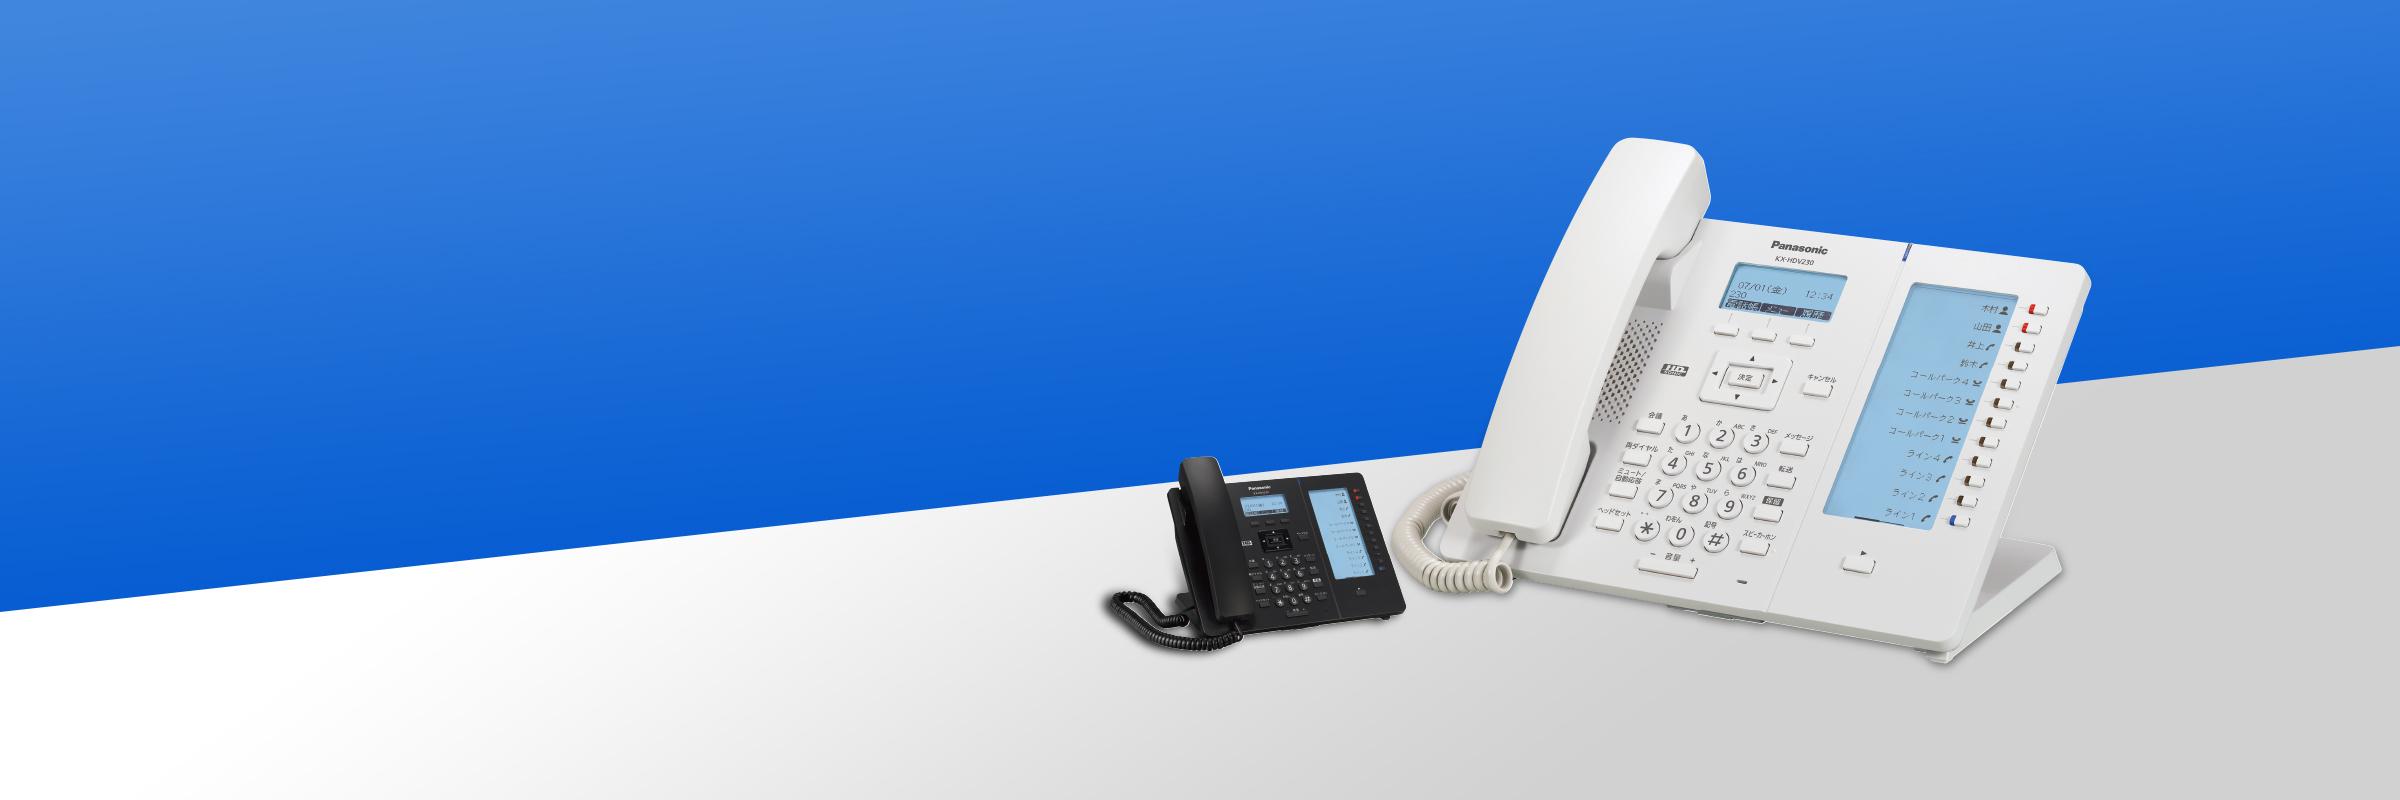 KX-HDV230N - ラインナップ - IP電話機 - 製品・サービス - パナソニック コネクト